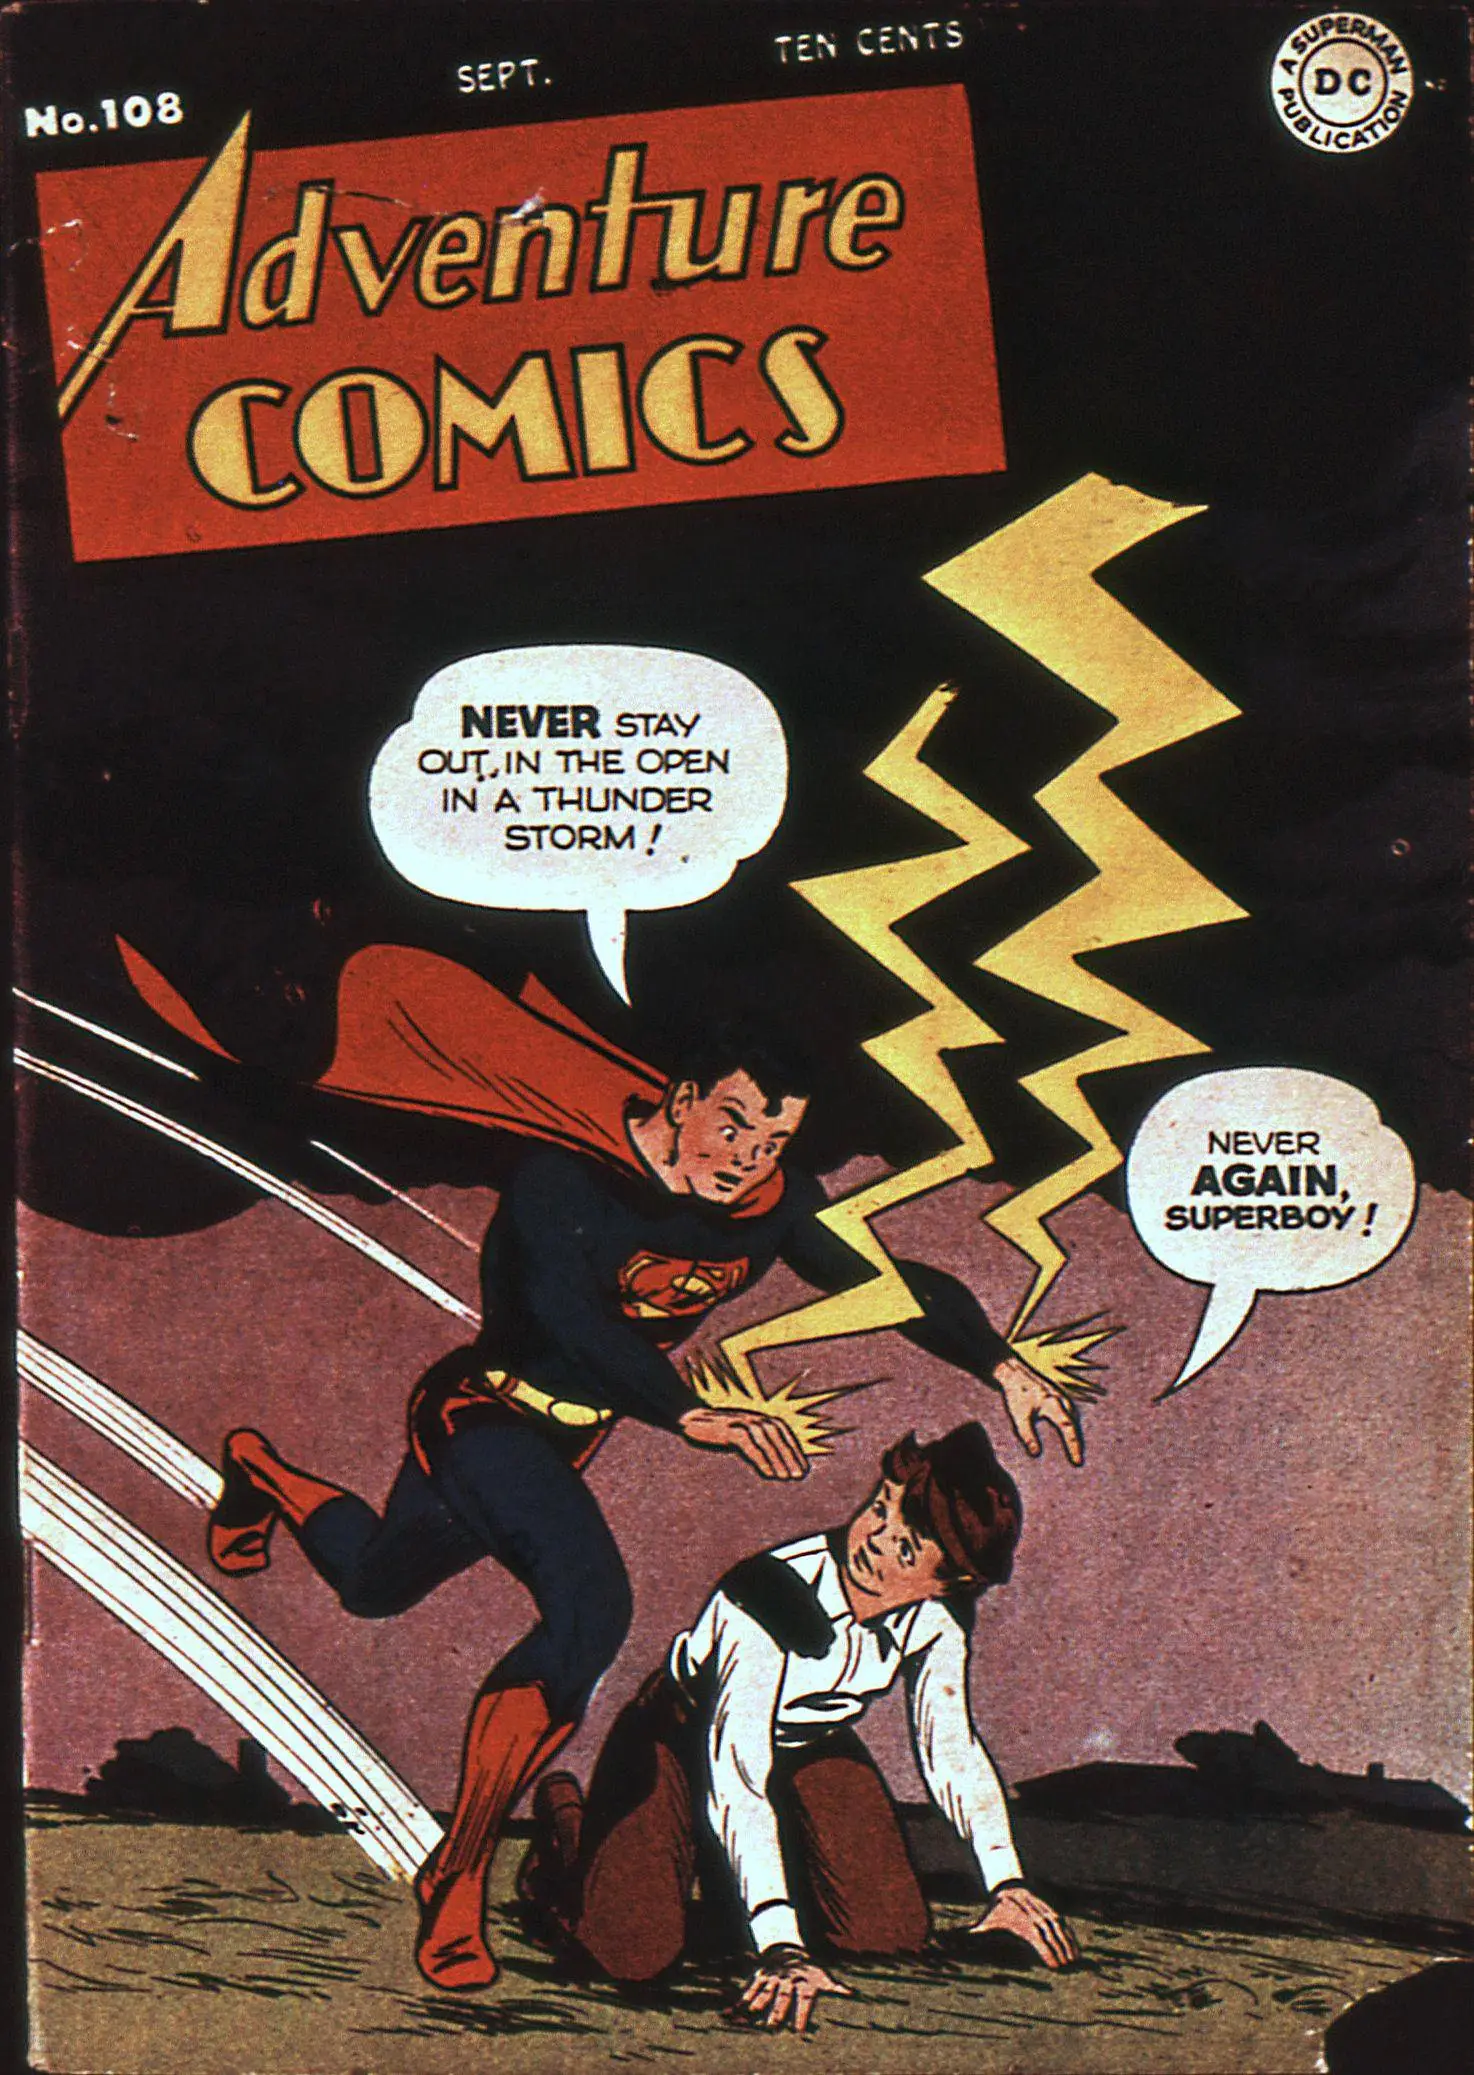 Adventure Comics 1946-09 108